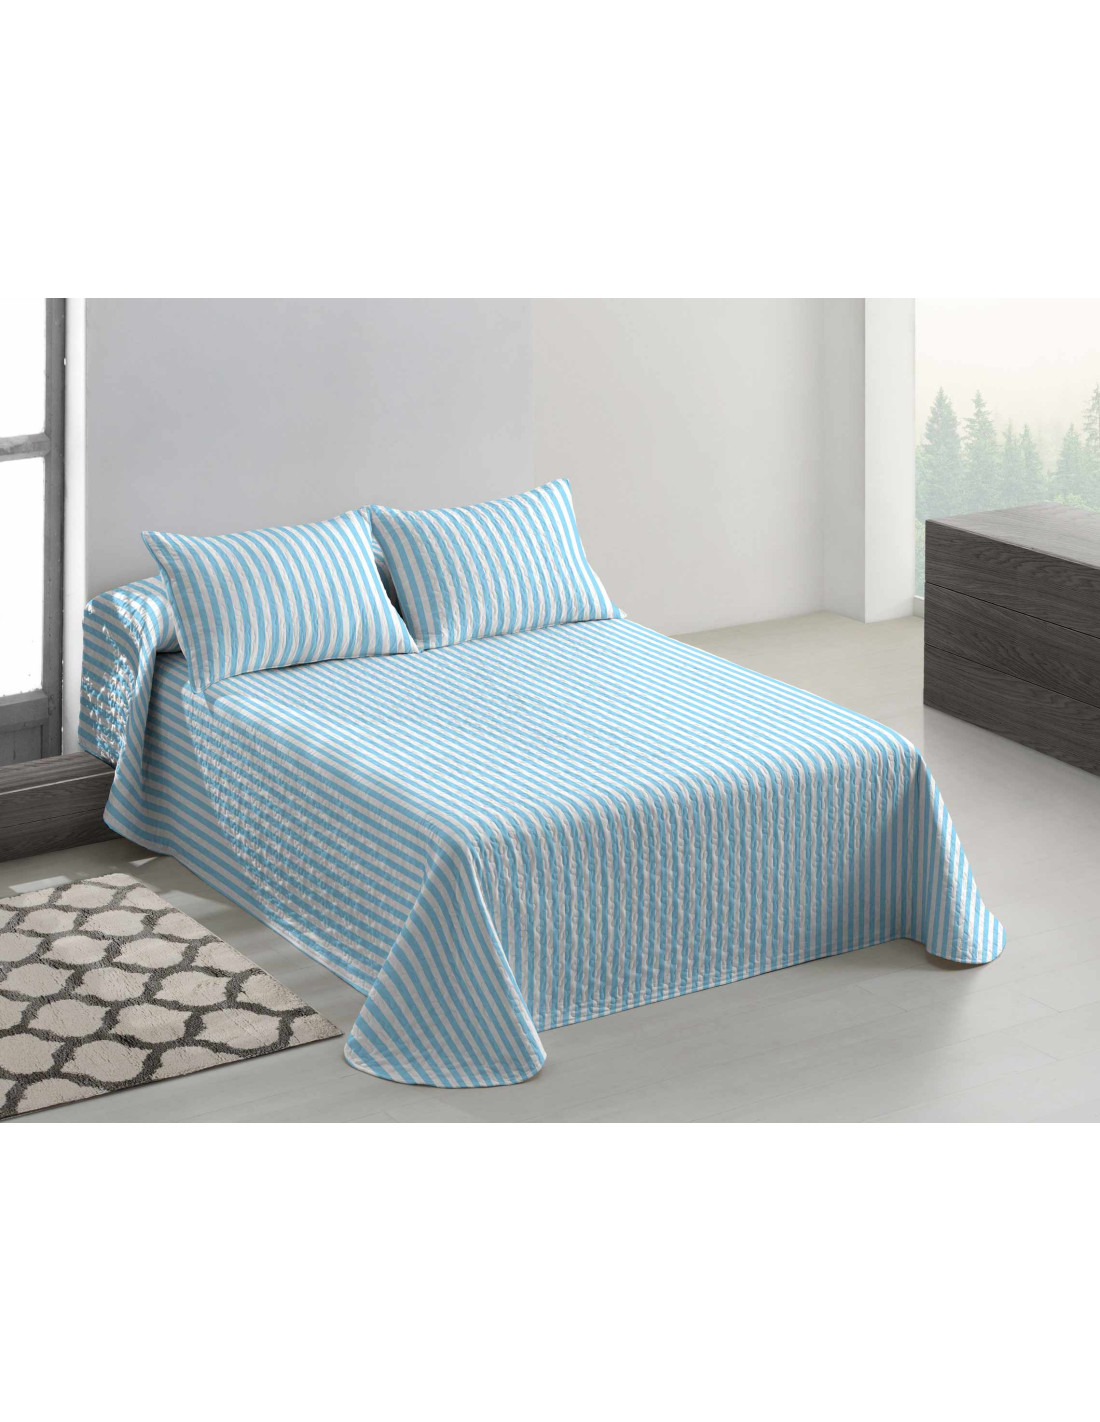 Colcha Bouti para Cama Verano. Colcha cubre cama acolchada reversible  Rombos. Cama 105 - 200 x 260 cm. Color Beige.